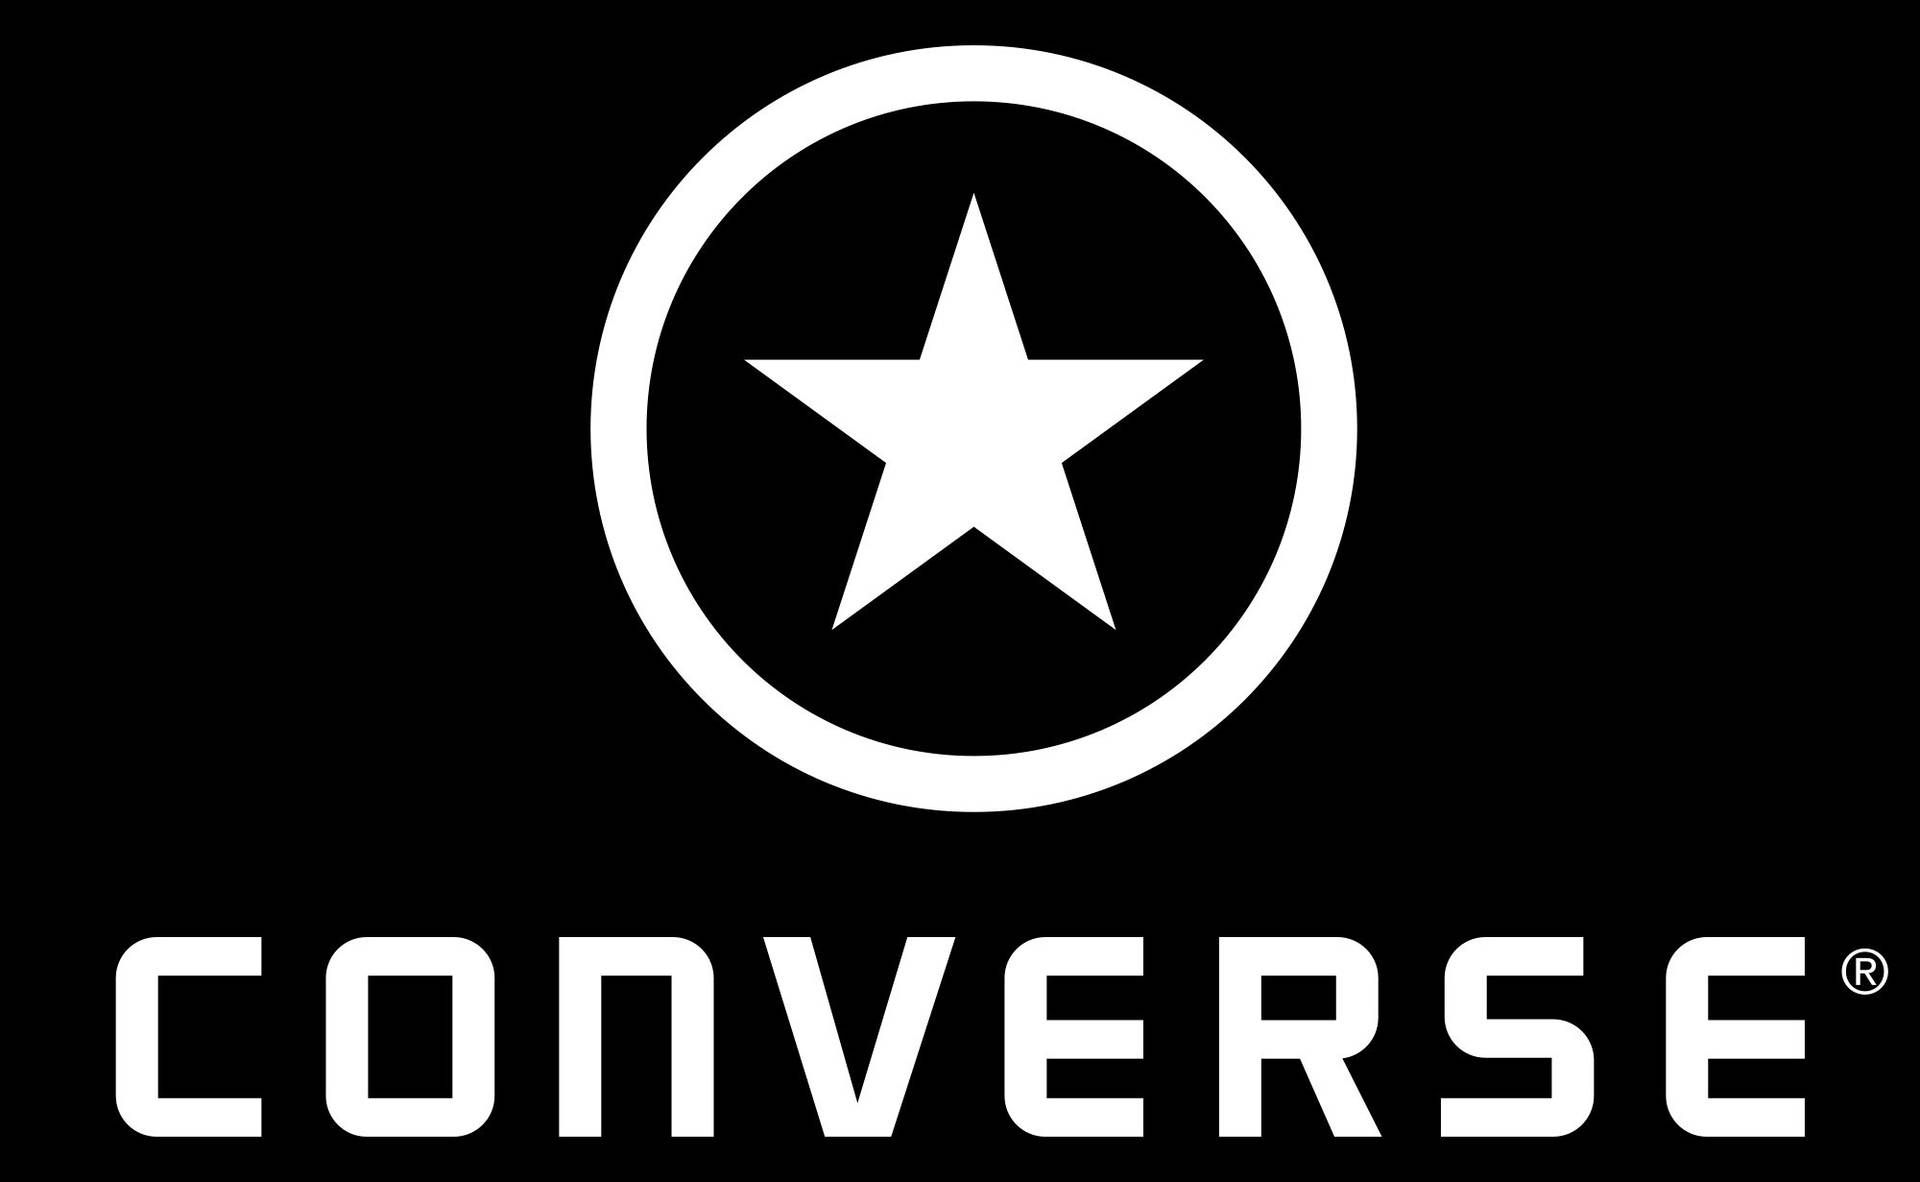 2003 White Converse Logo Background